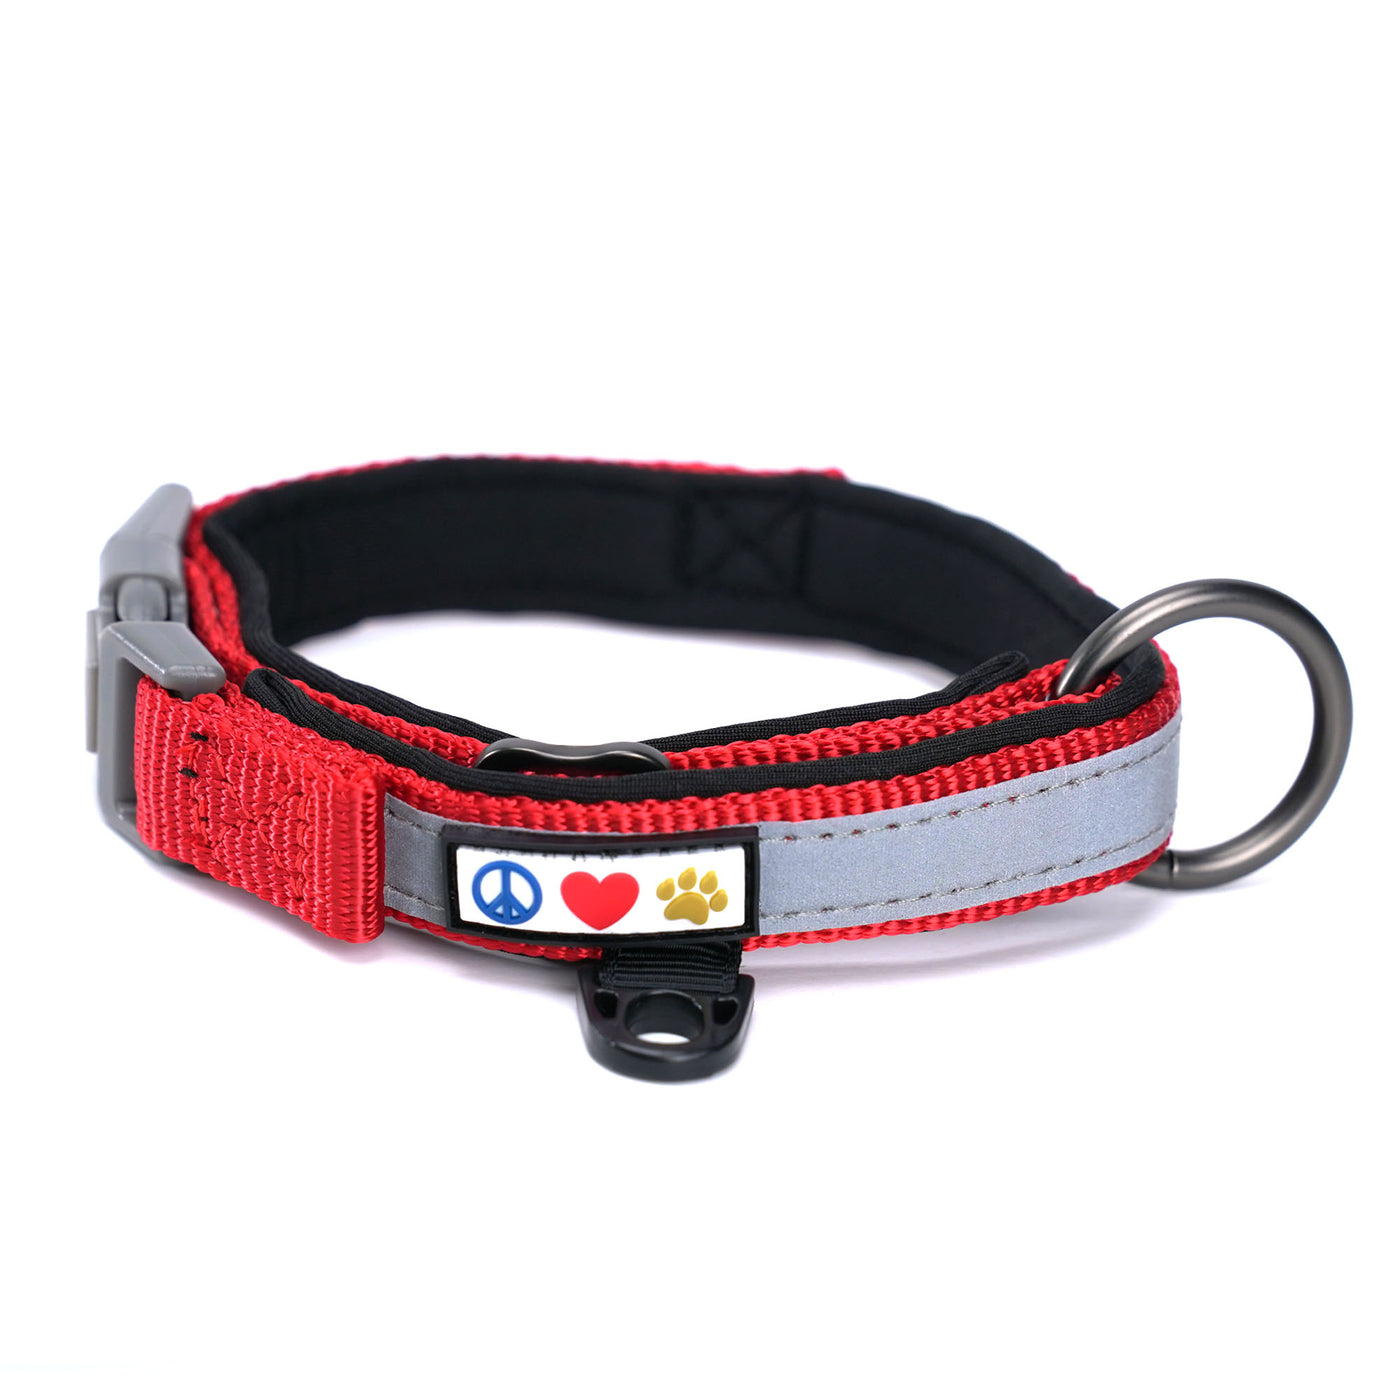 Red Reflective Neoprene Padded Dog Collar